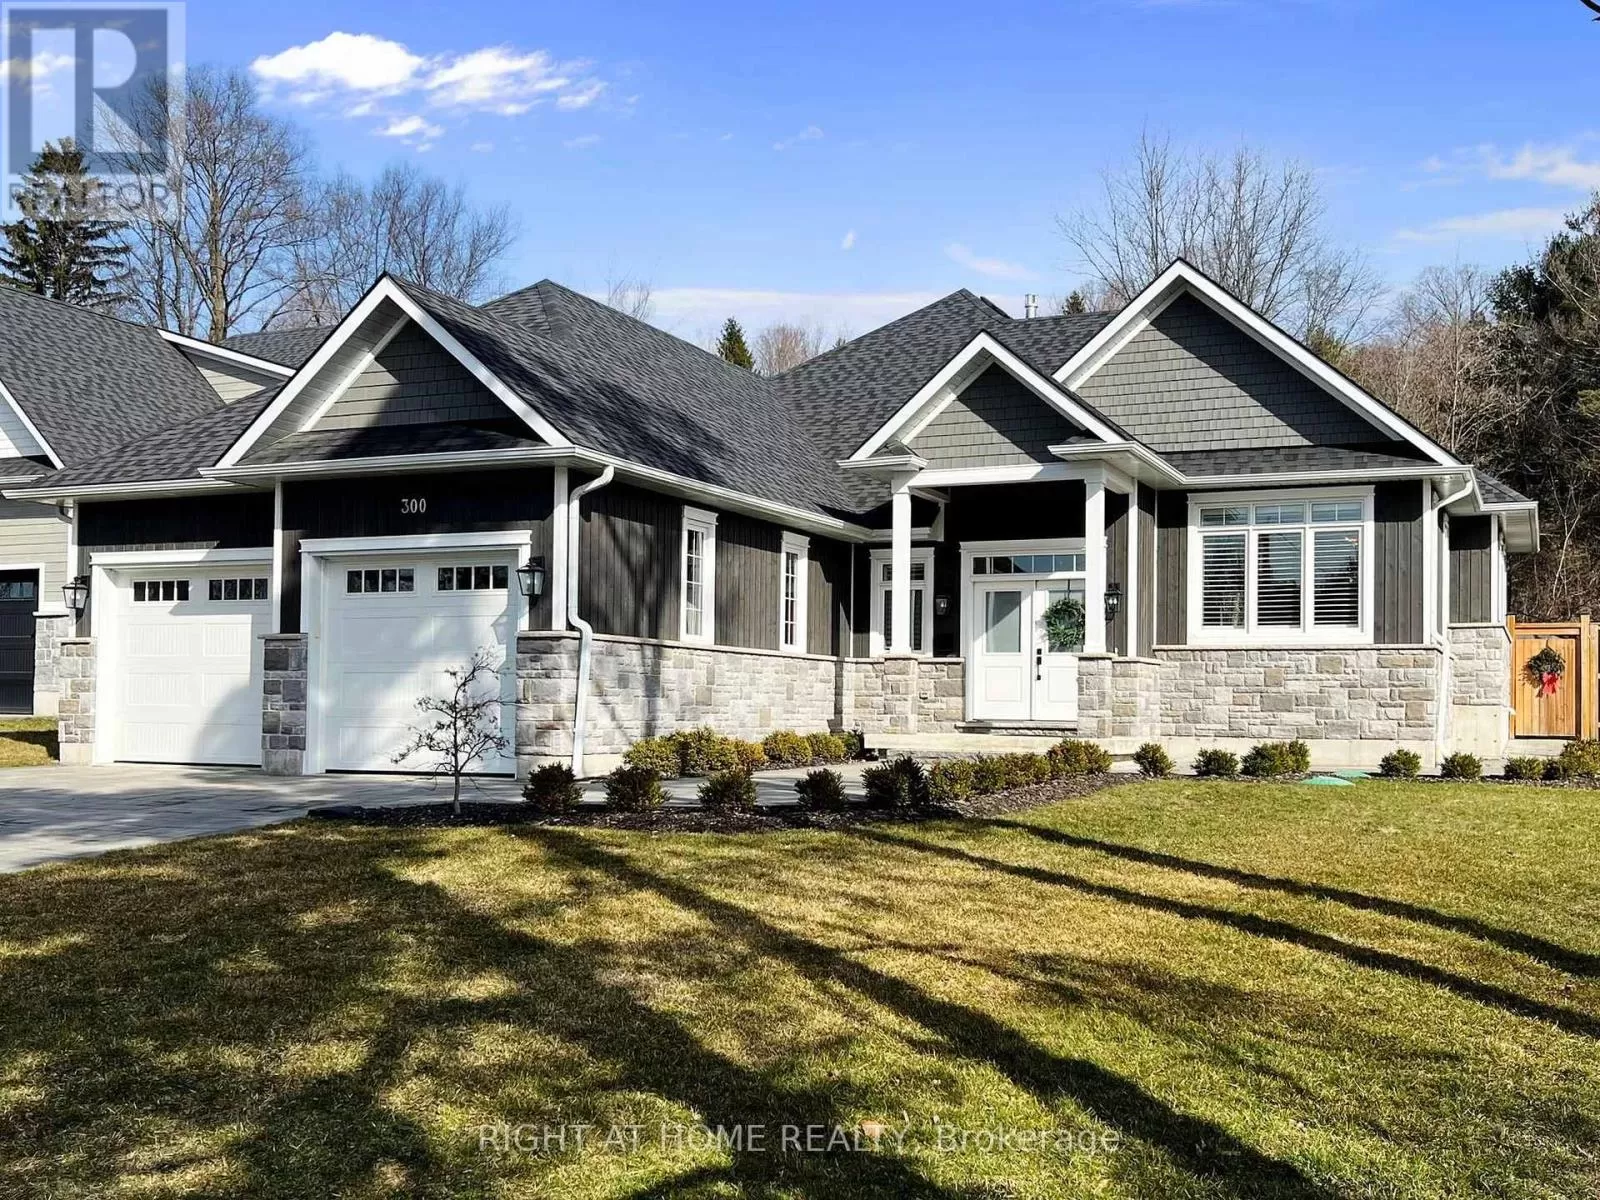 House for rent: 300 Shanty Bay Rd, Oro-Medonte, Ontario L4M 1E6